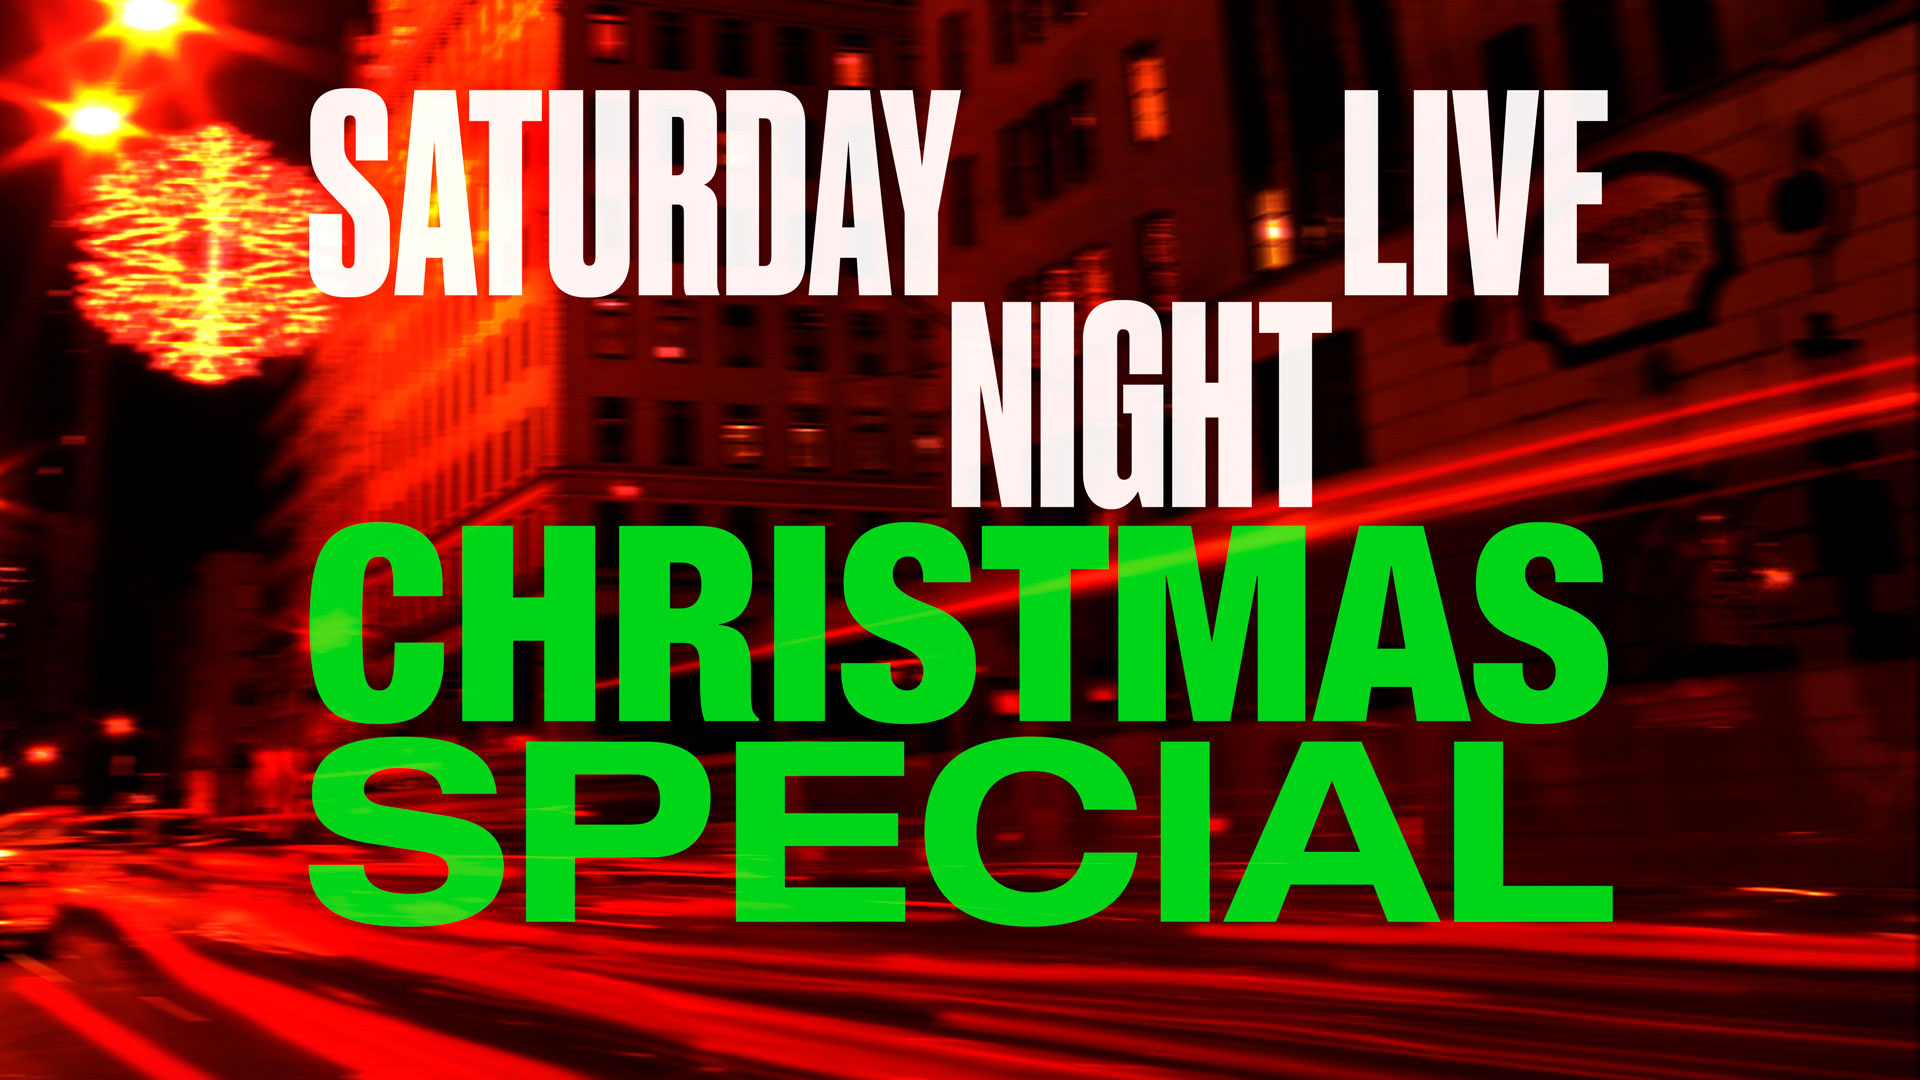 Watch Saturday Night Live Episode: A Saturday Night Live Christmas Special - NBC.com